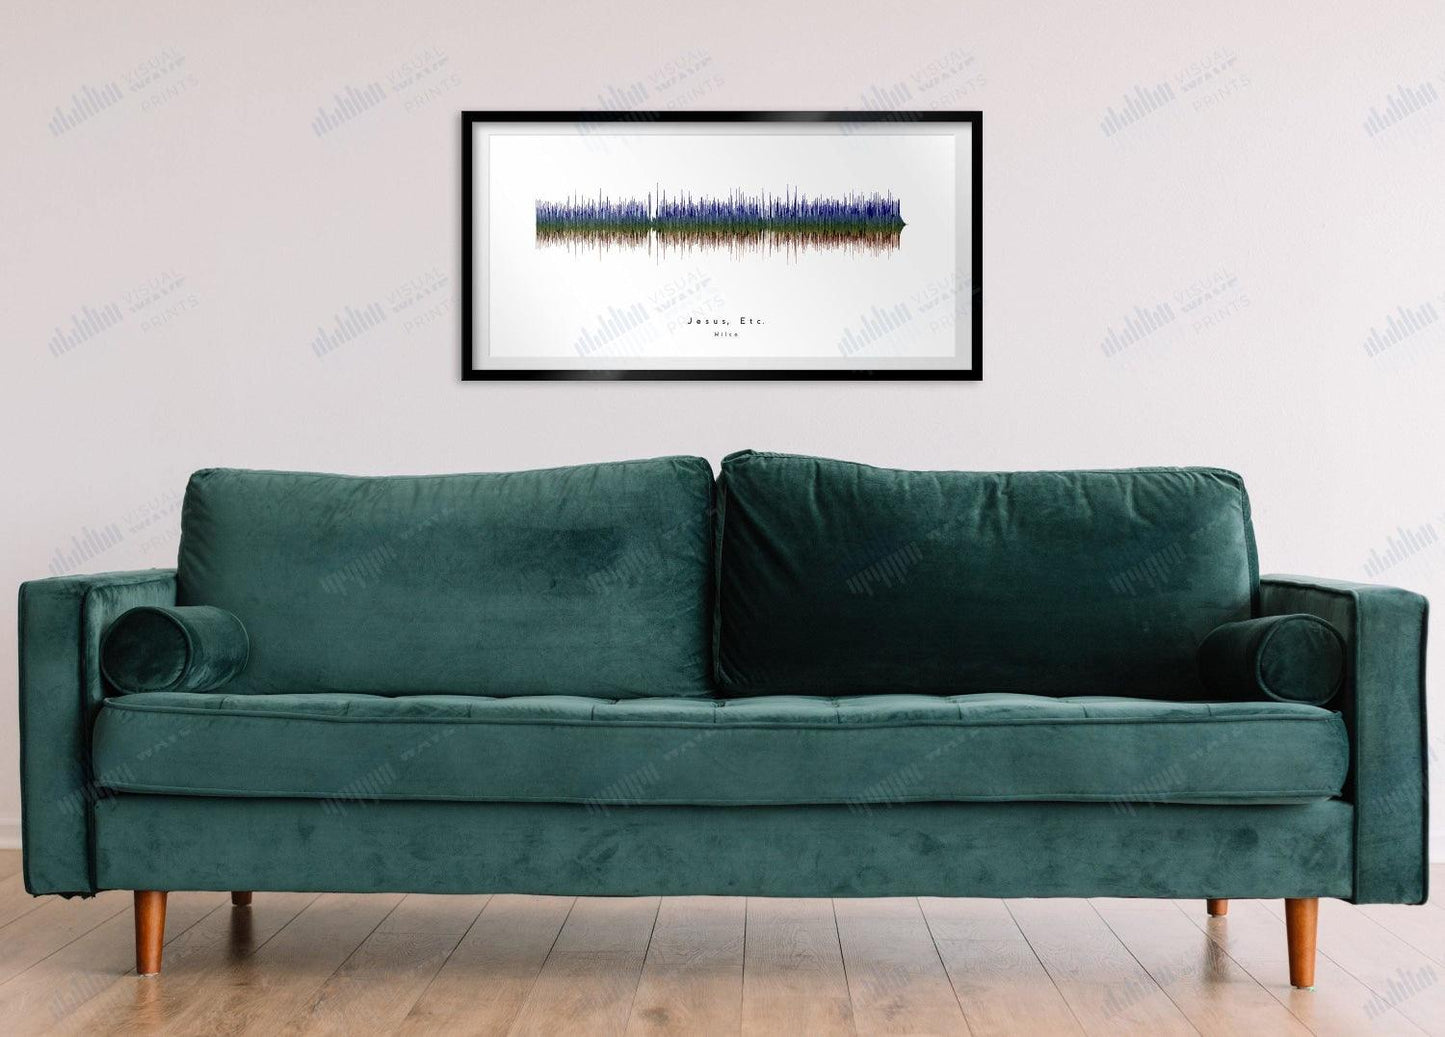 Jesus, Etc. by Wilco - Visual Wave Prints